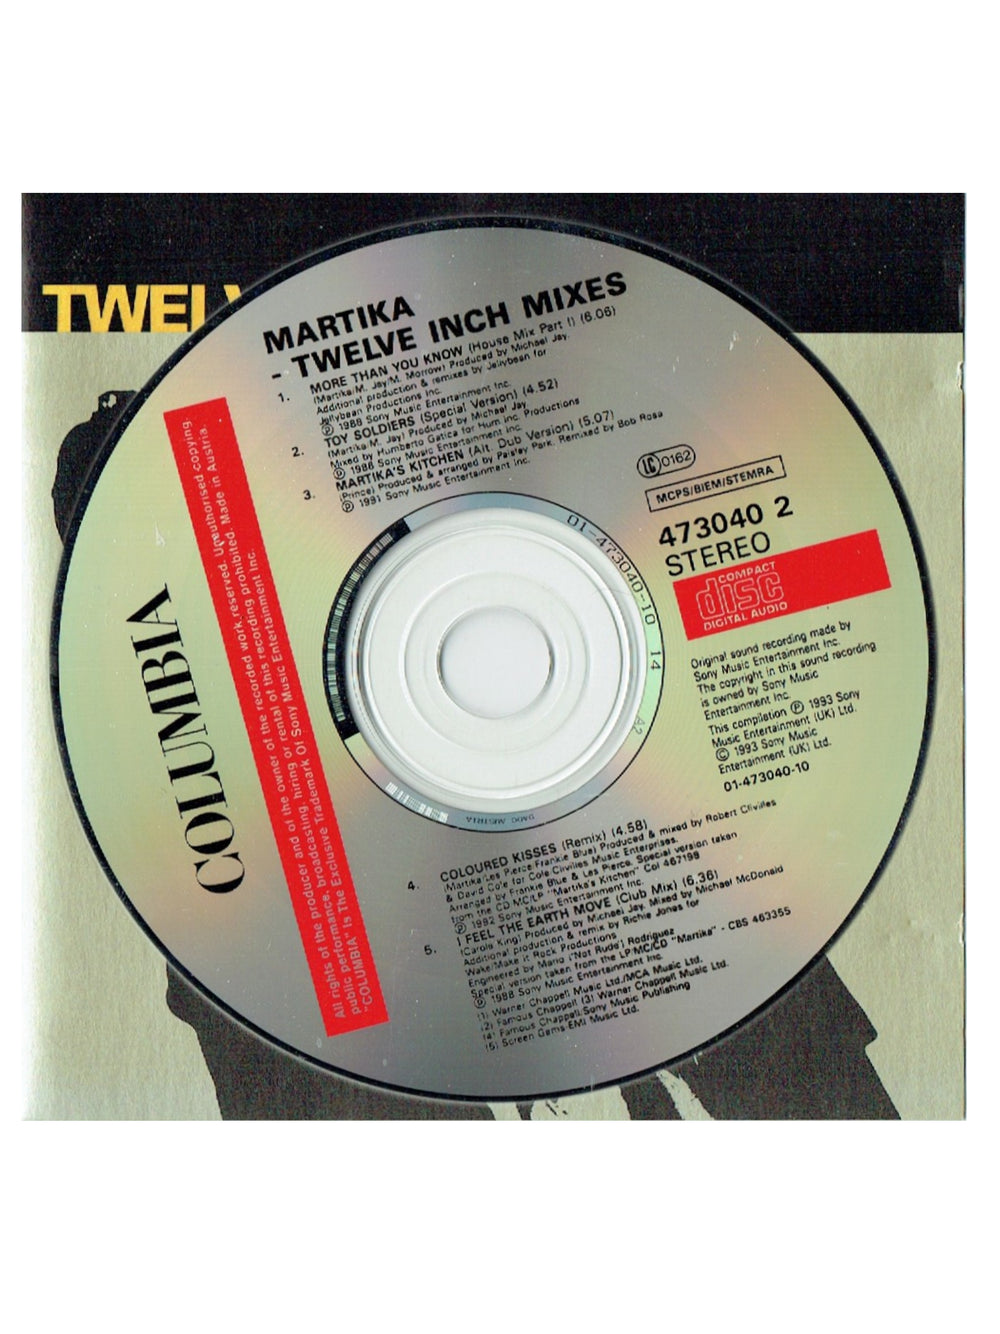 Prince – Martika Twelve Inch Mixes CD Album Prince